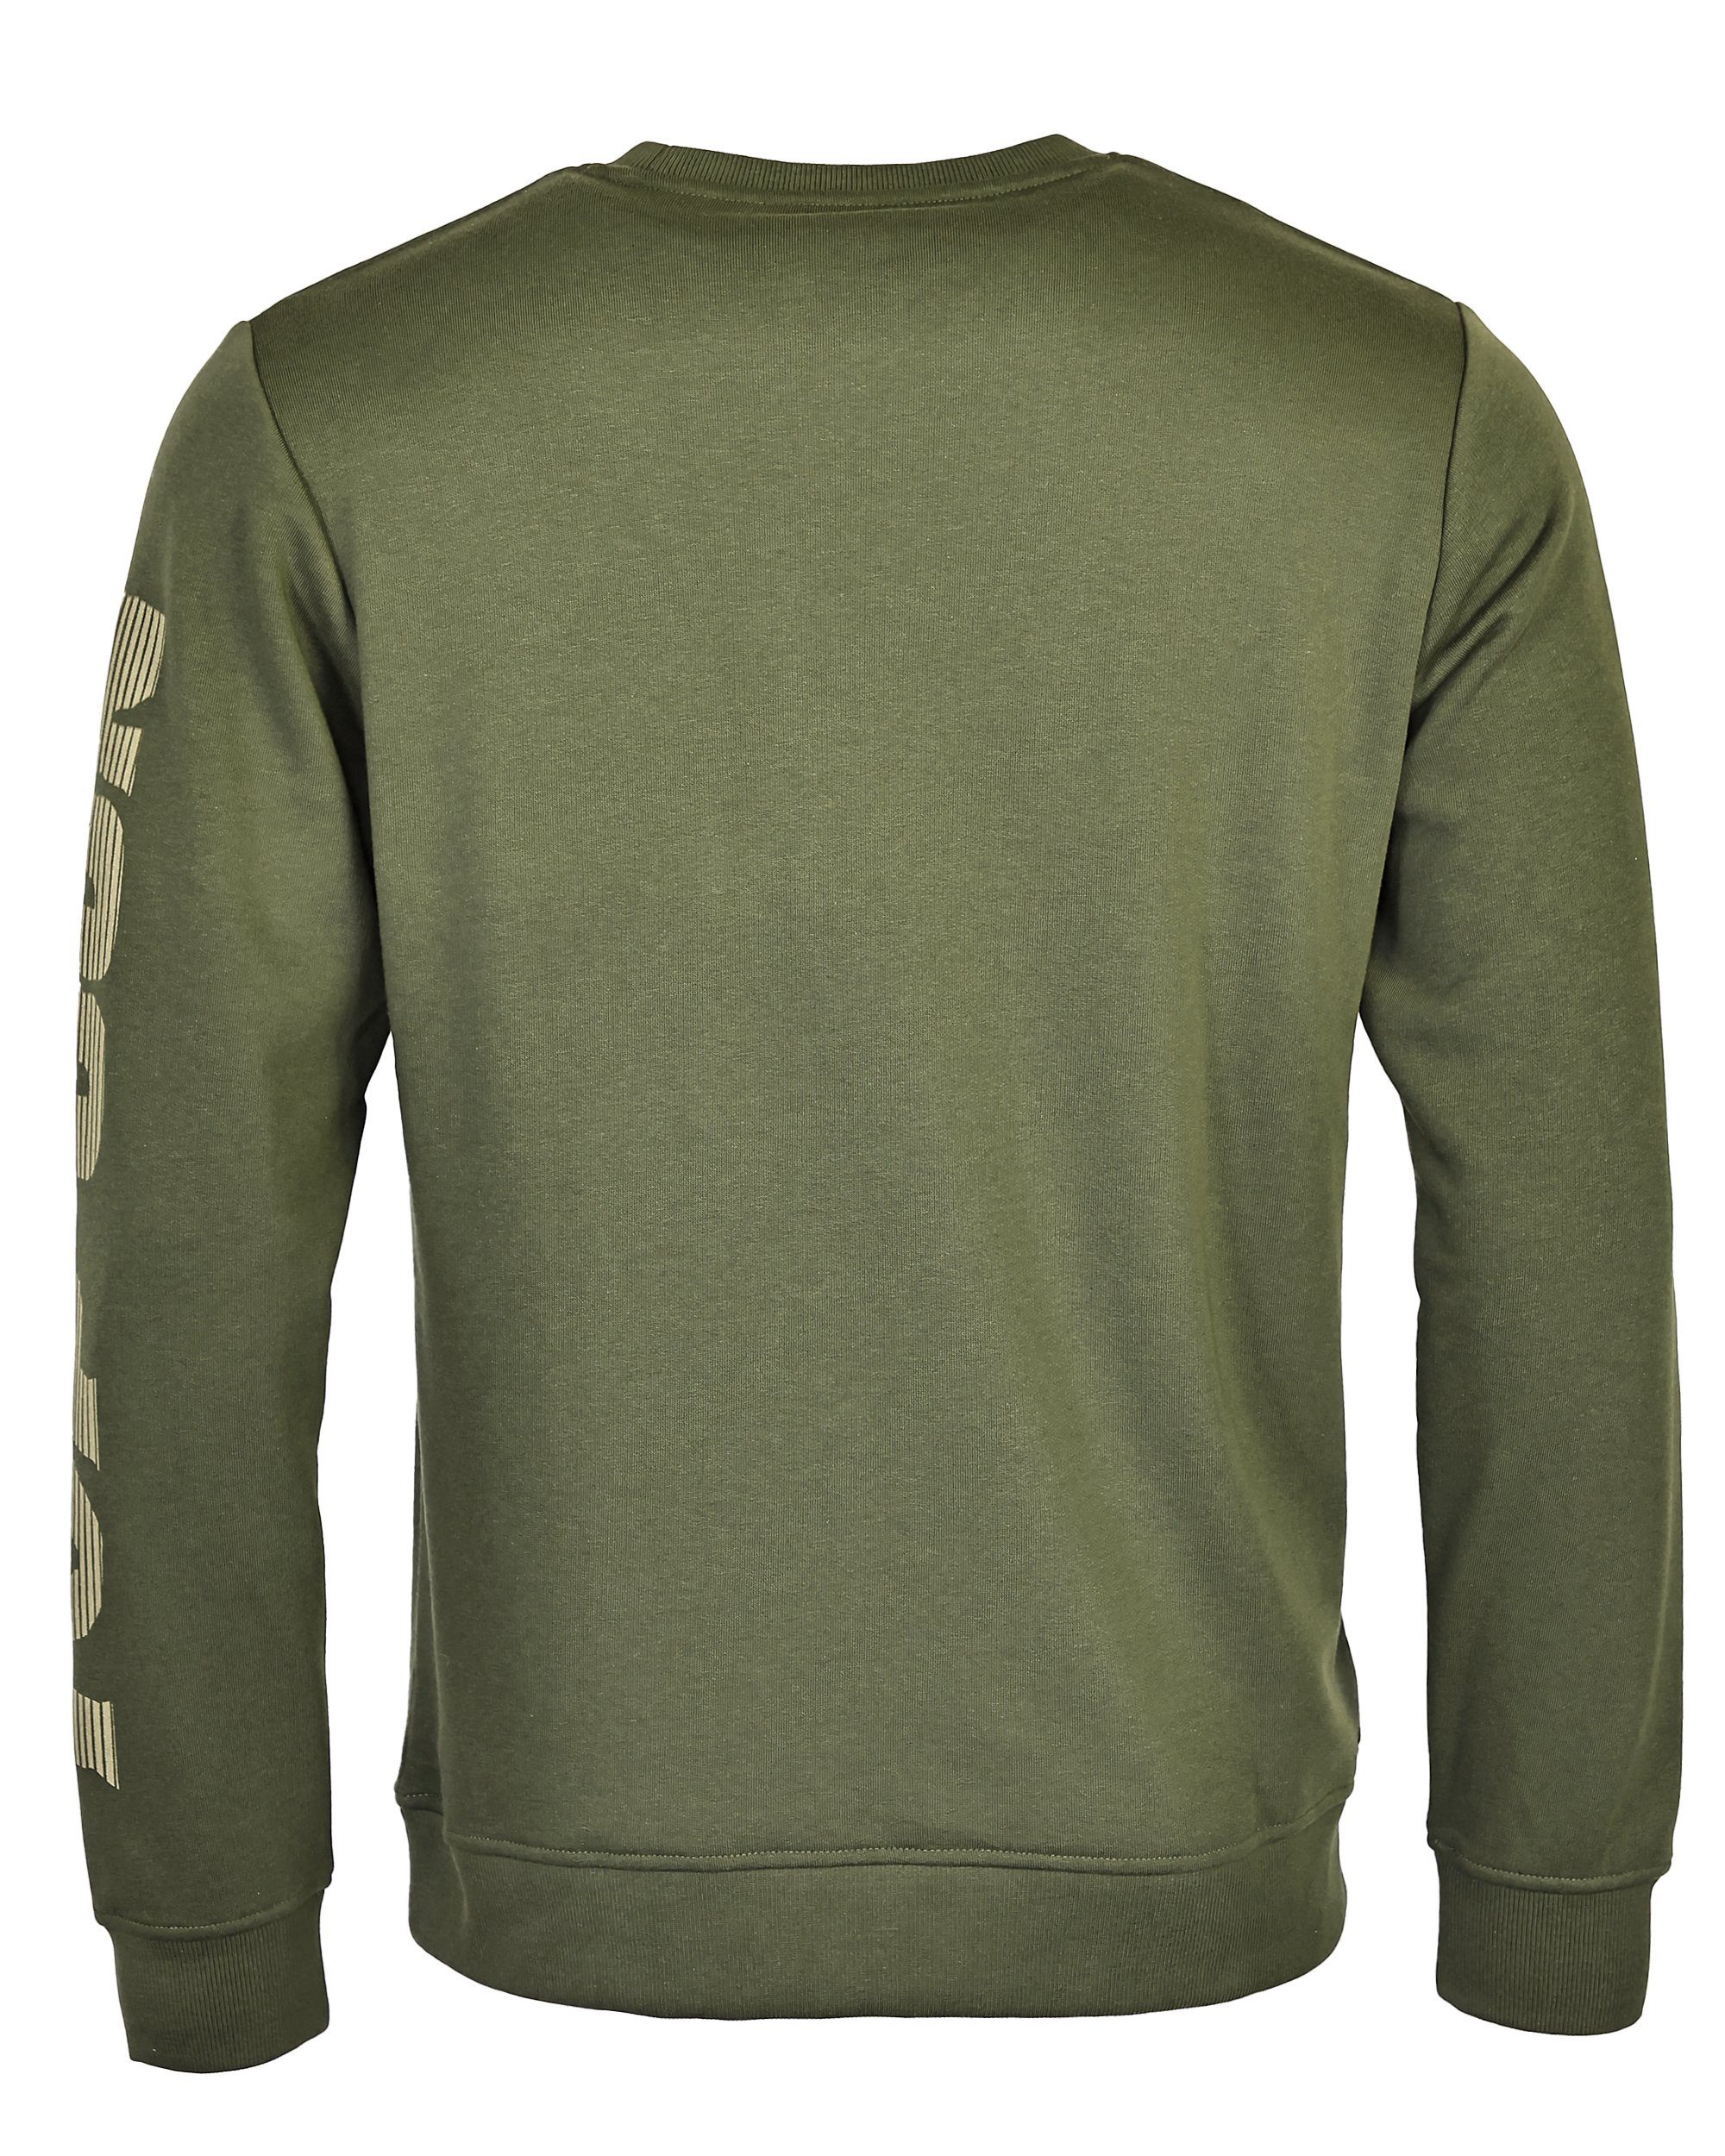 olive GUN Sweater TG22008 TOP